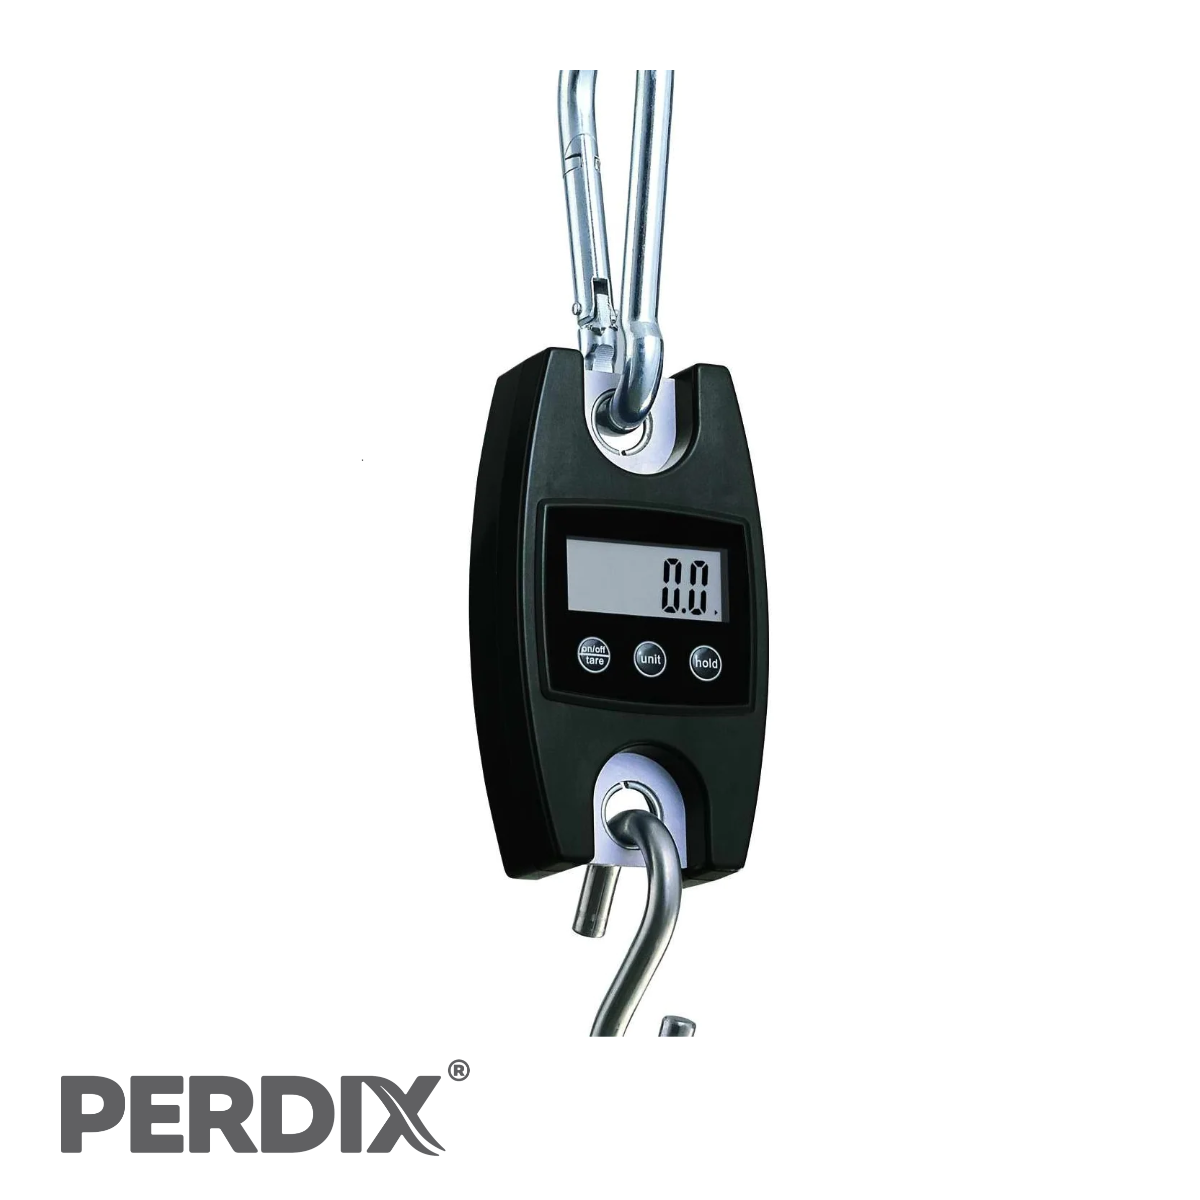 Perdix Wildlife Supplies - PerdixPro Remote Monitoring Small Trap Tag